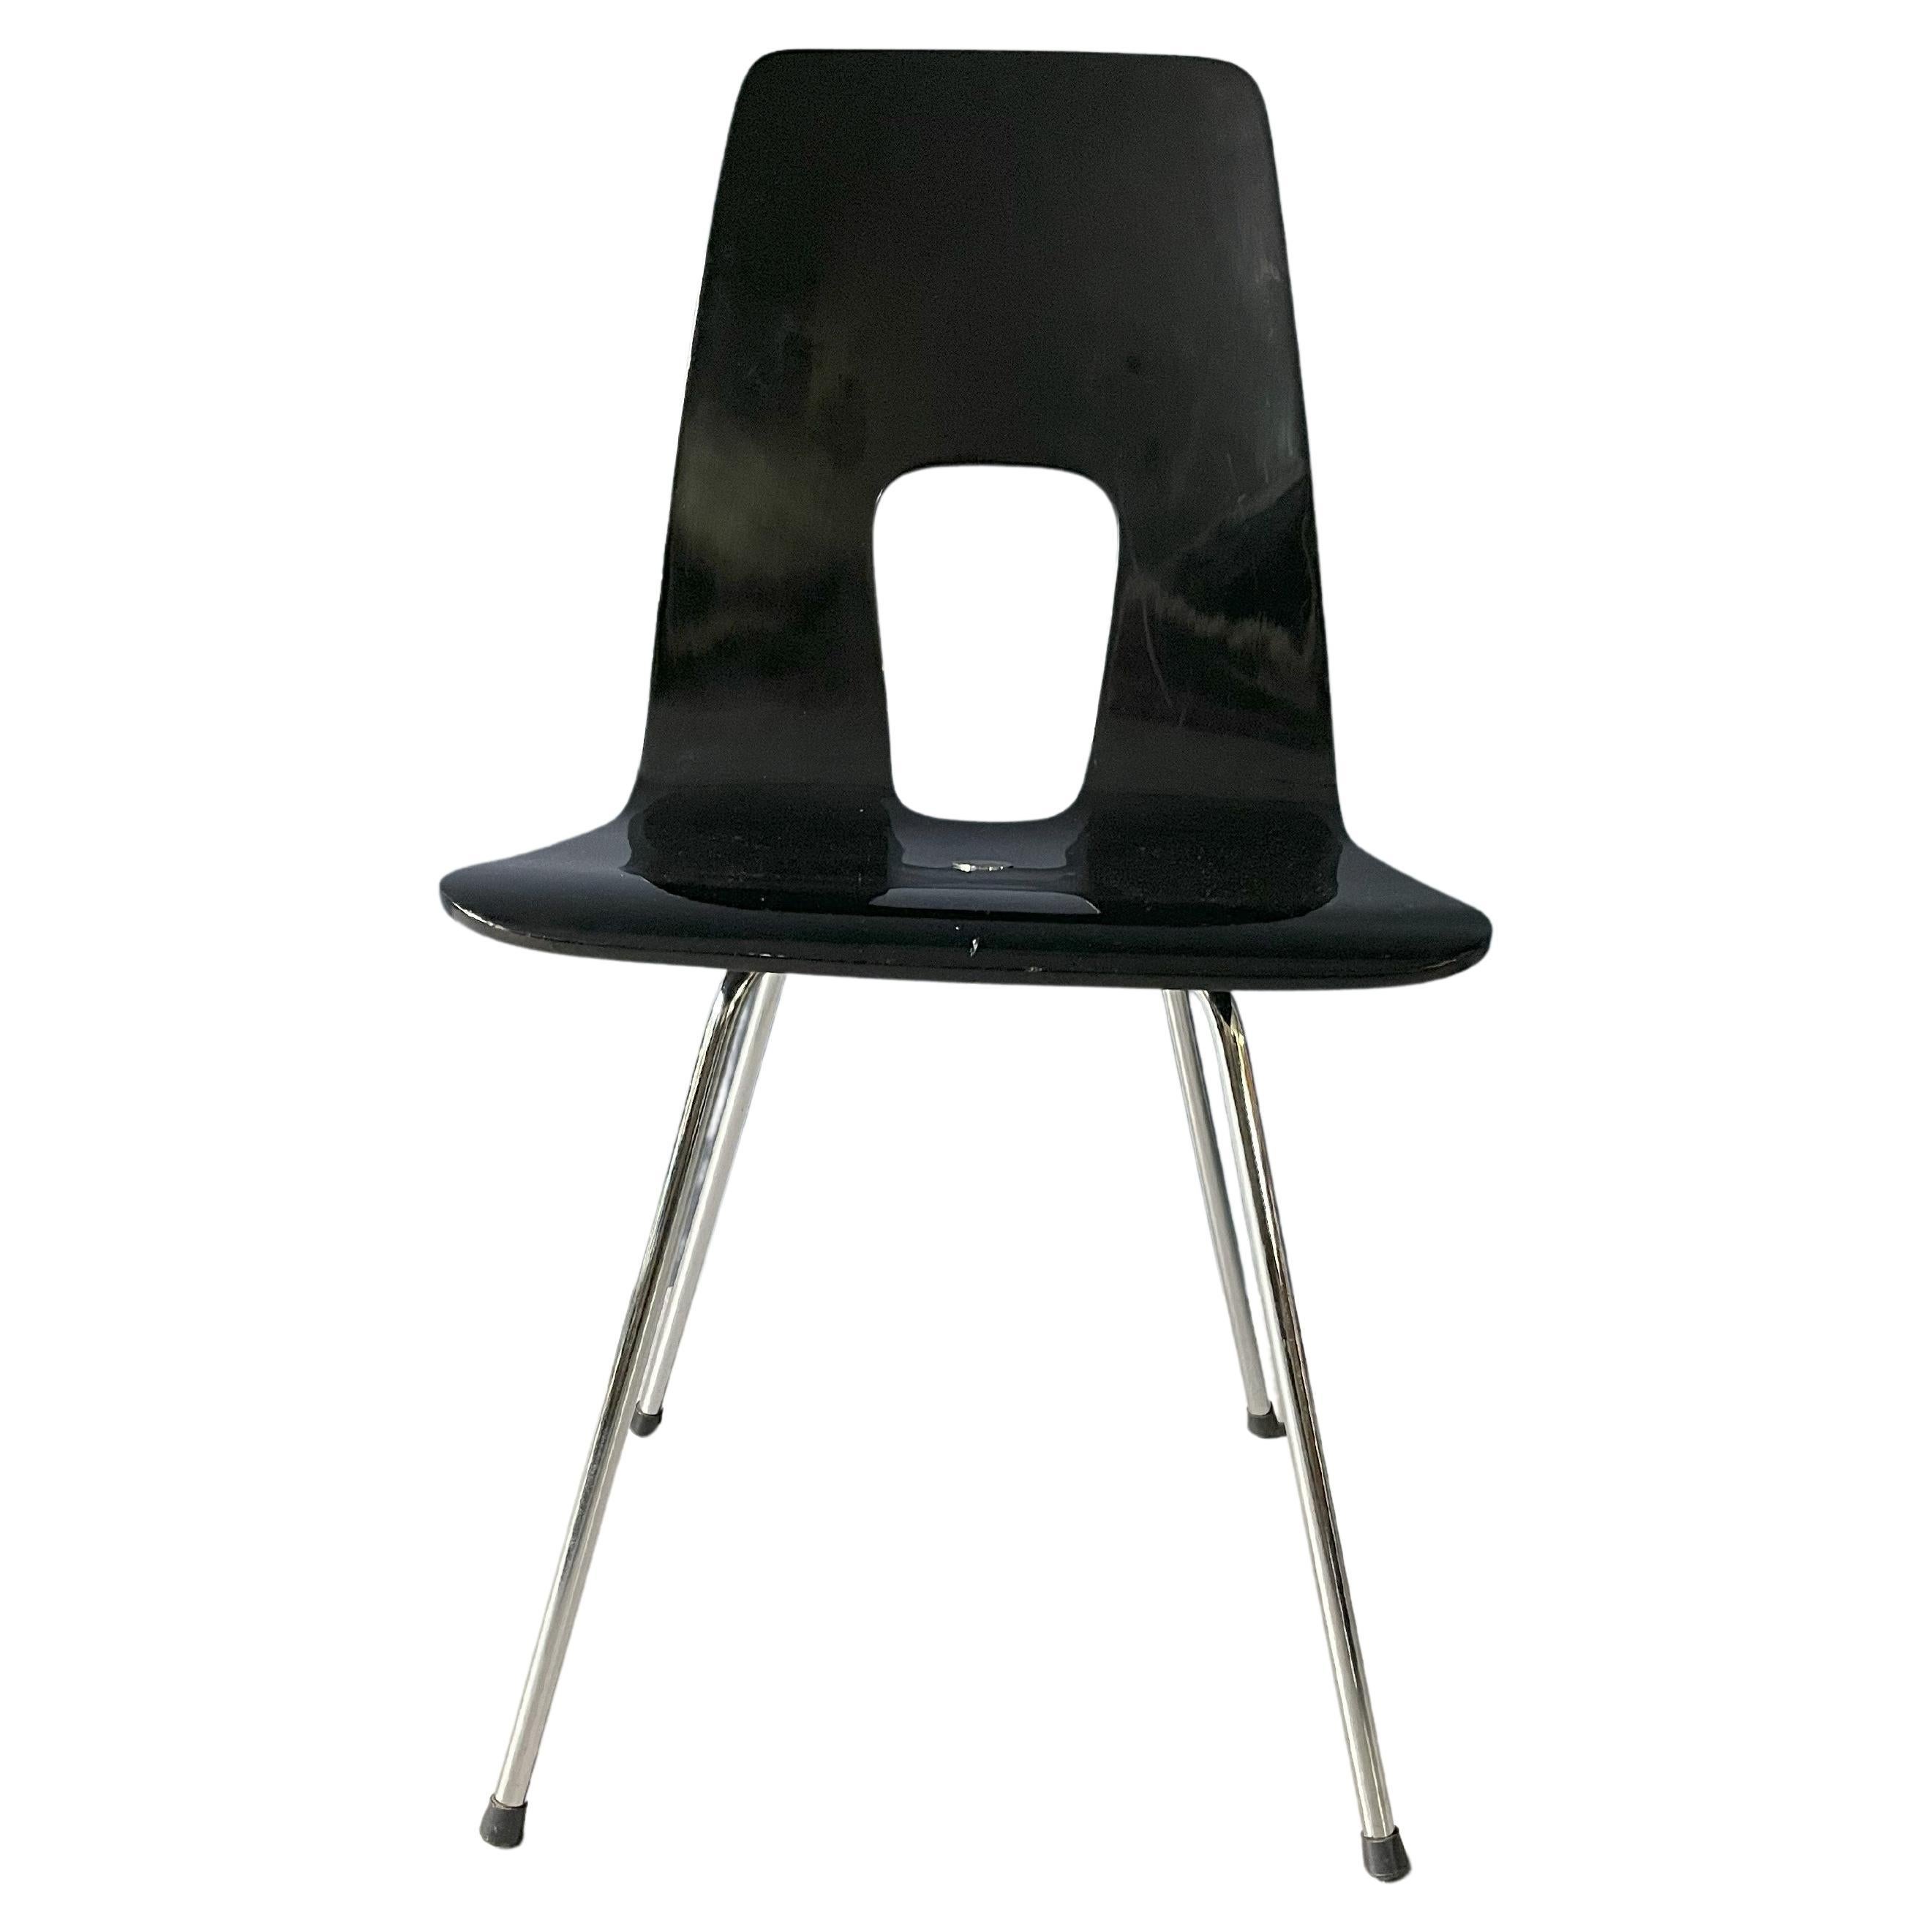 A set of 6 "Einpunkt" black chairs, designed by Hans Bellmann